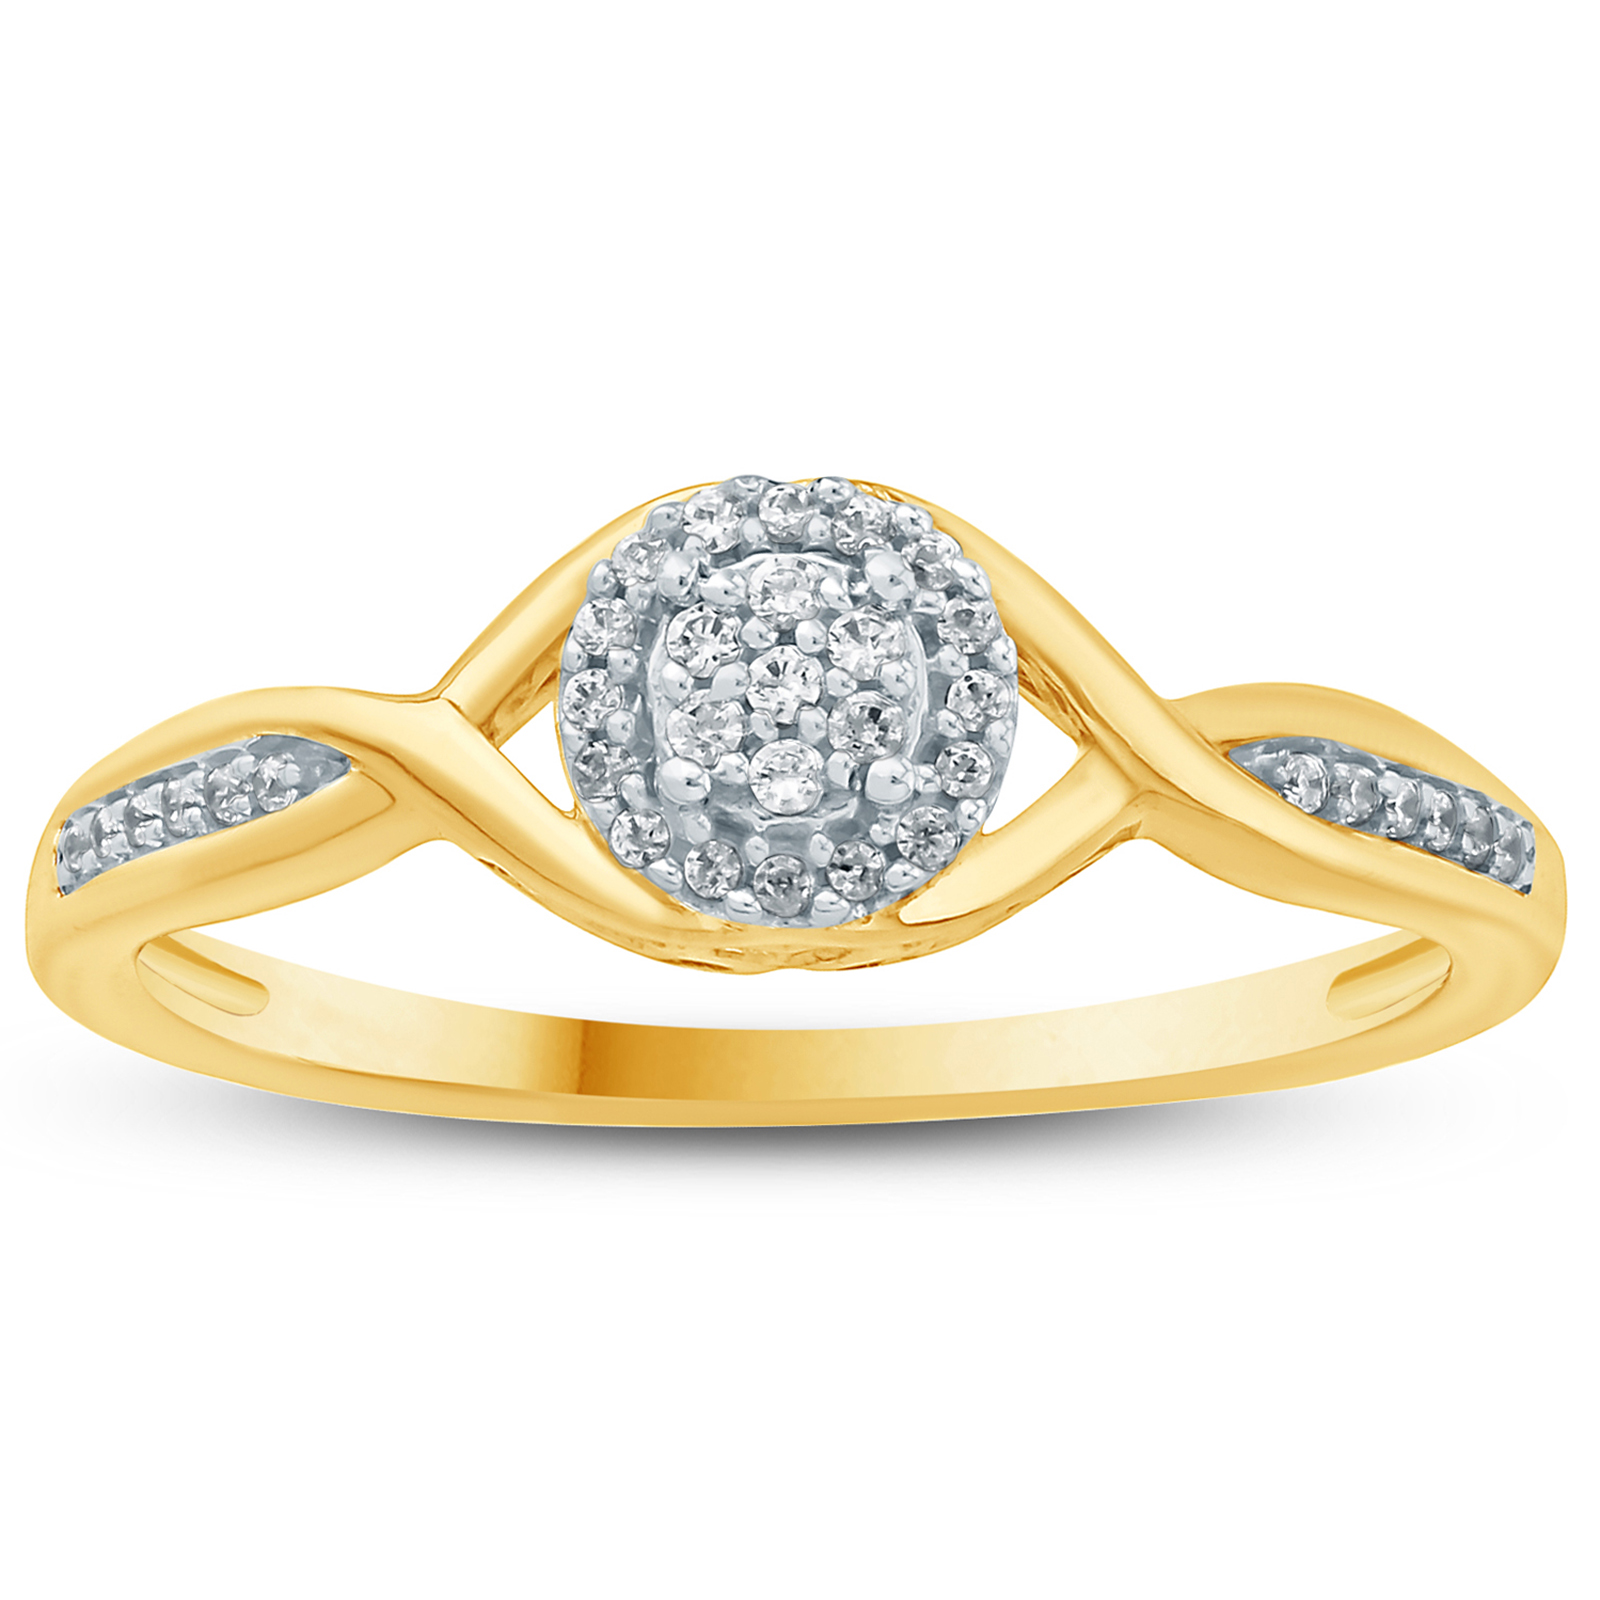 1/10 Carat TW Diamond Fashion Ring in 10K Yellow Gold